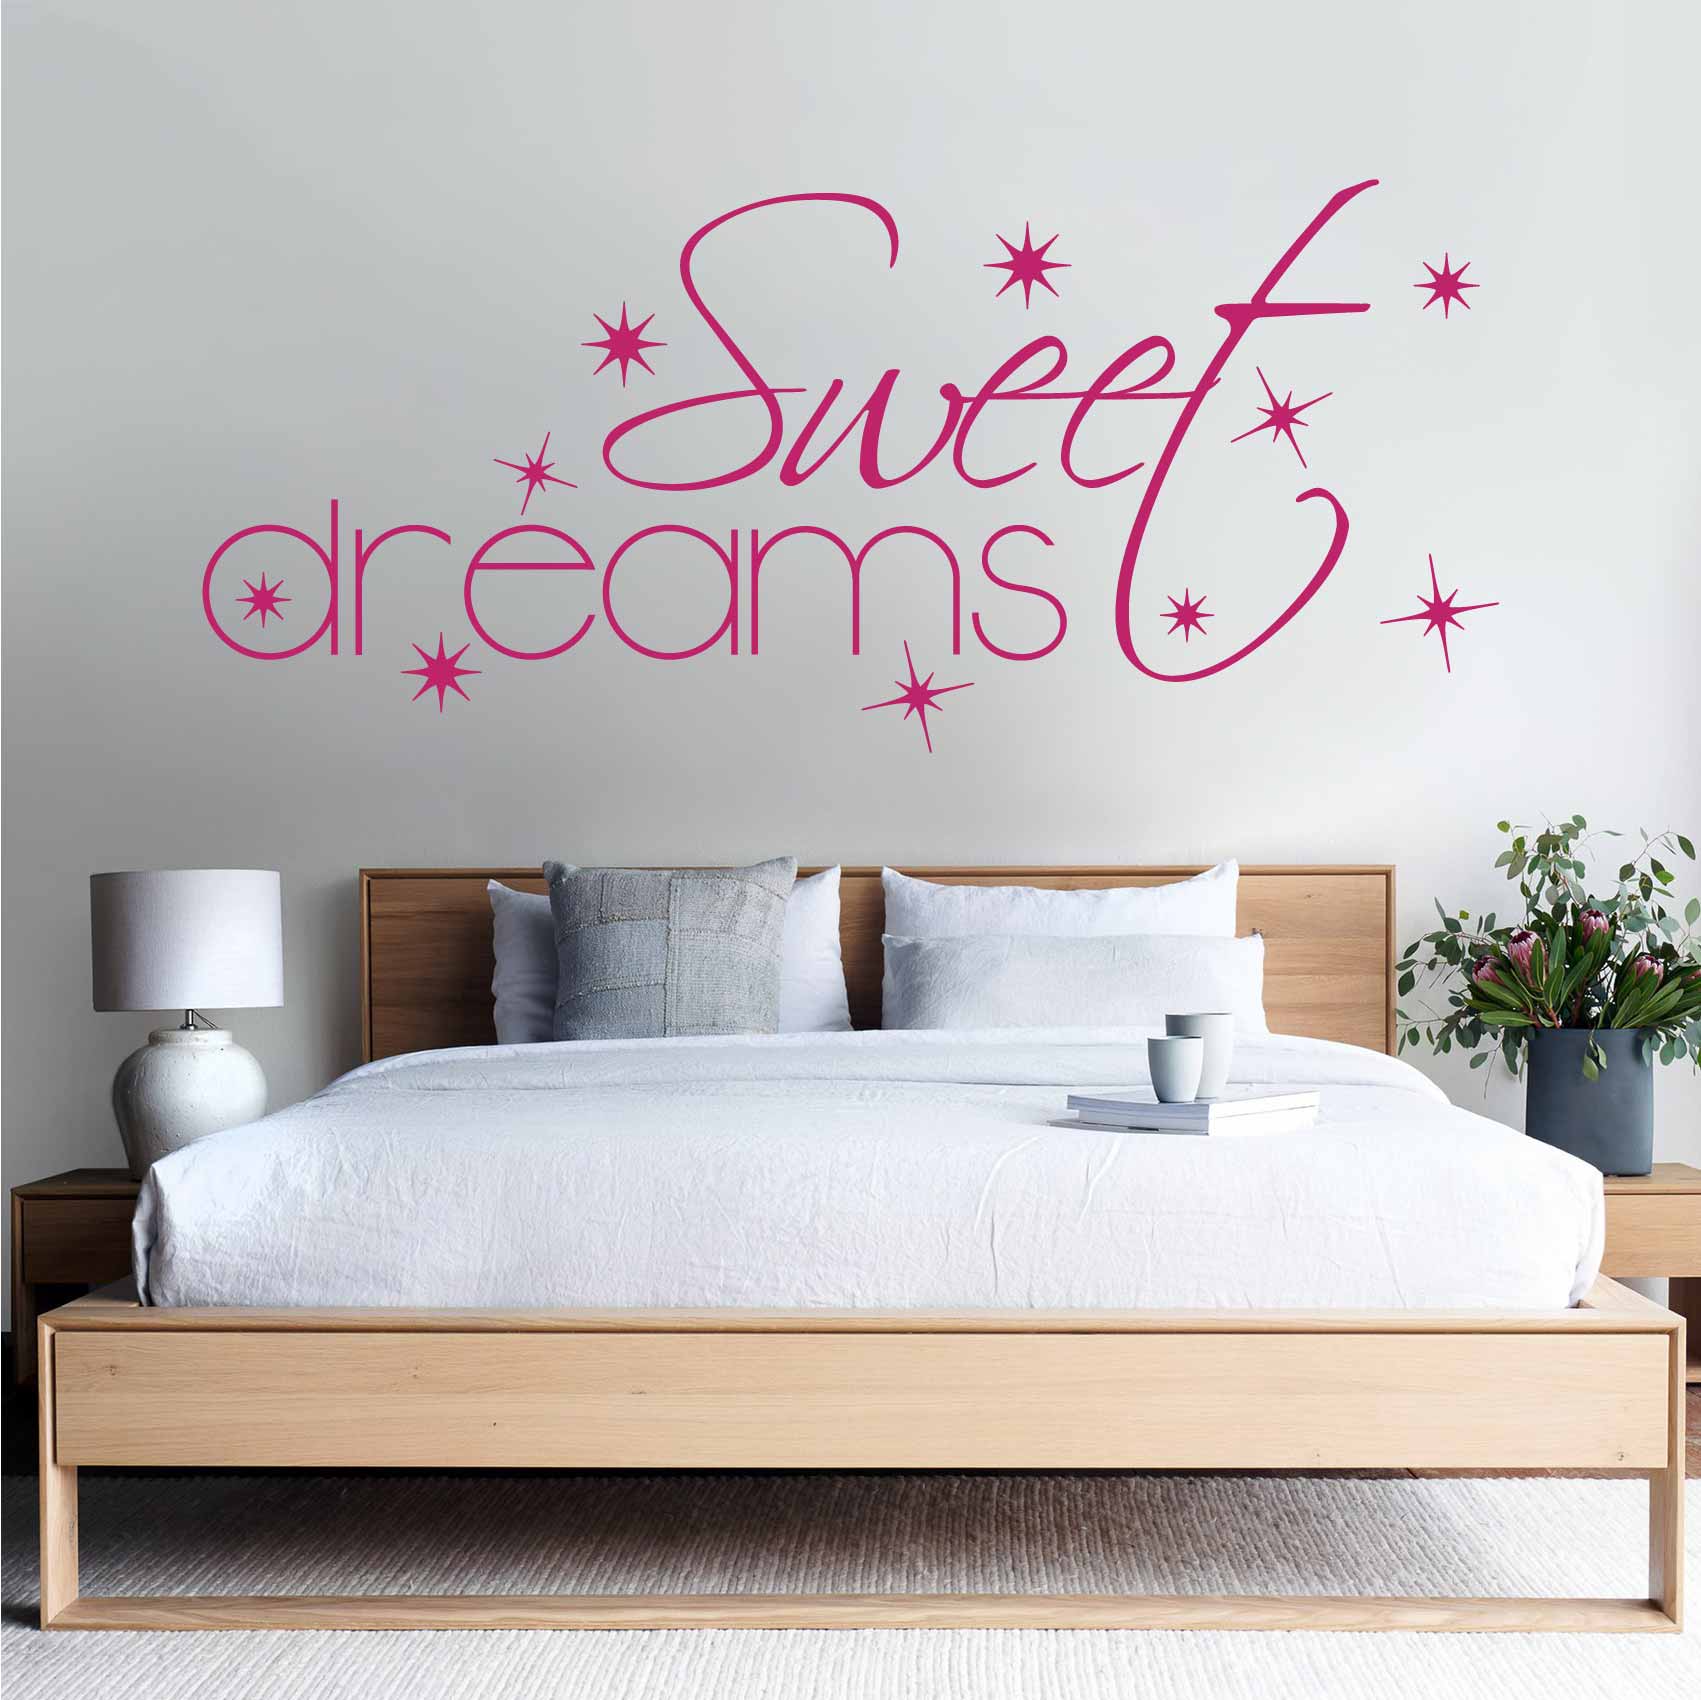 stickers-chambre-sweet-dreams-ref2chambre-autocollant-muraux-sticker-mural-deco-adulte-chambre-a-coucher-parents-couple-decoration